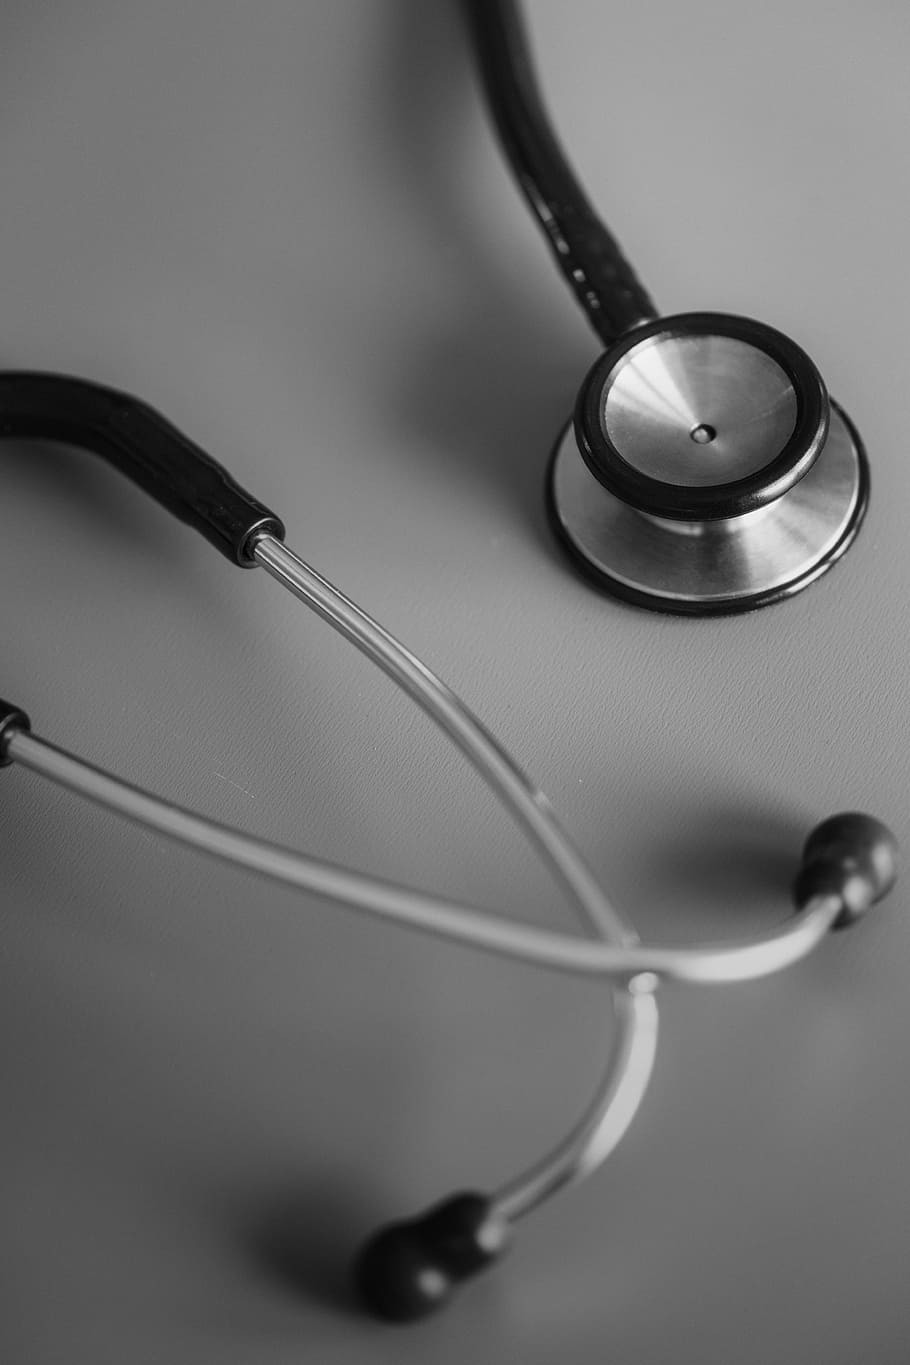 HD wallpaper: silver and black stethoscope, medical, listen, medical  equipment | Wallpaper Flare